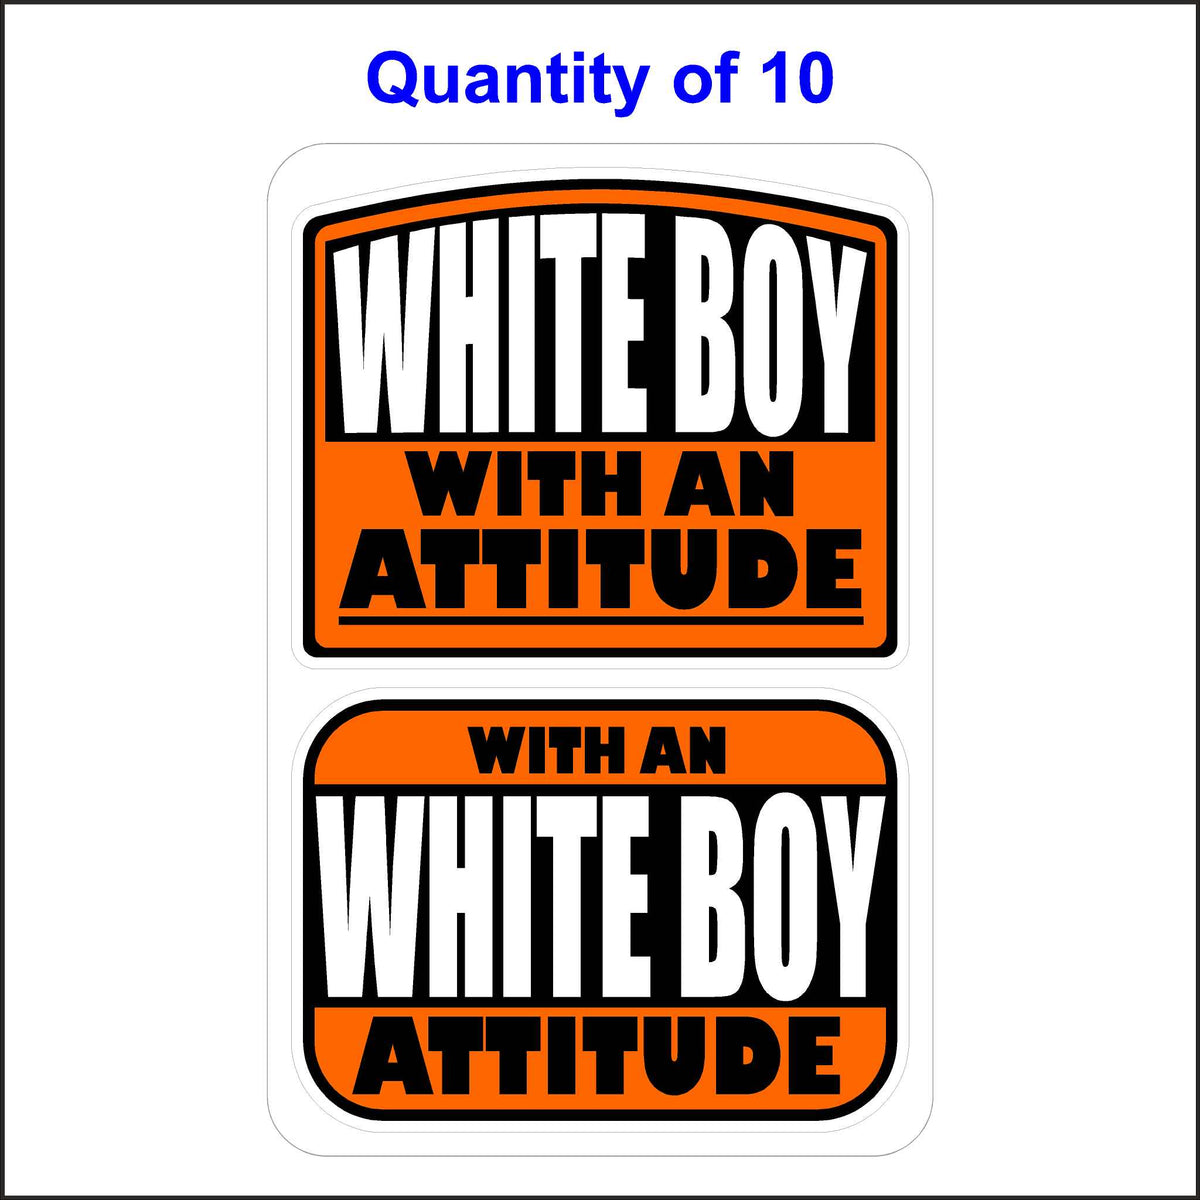 White Boy With An Attitude Stickers 10 Quantity.